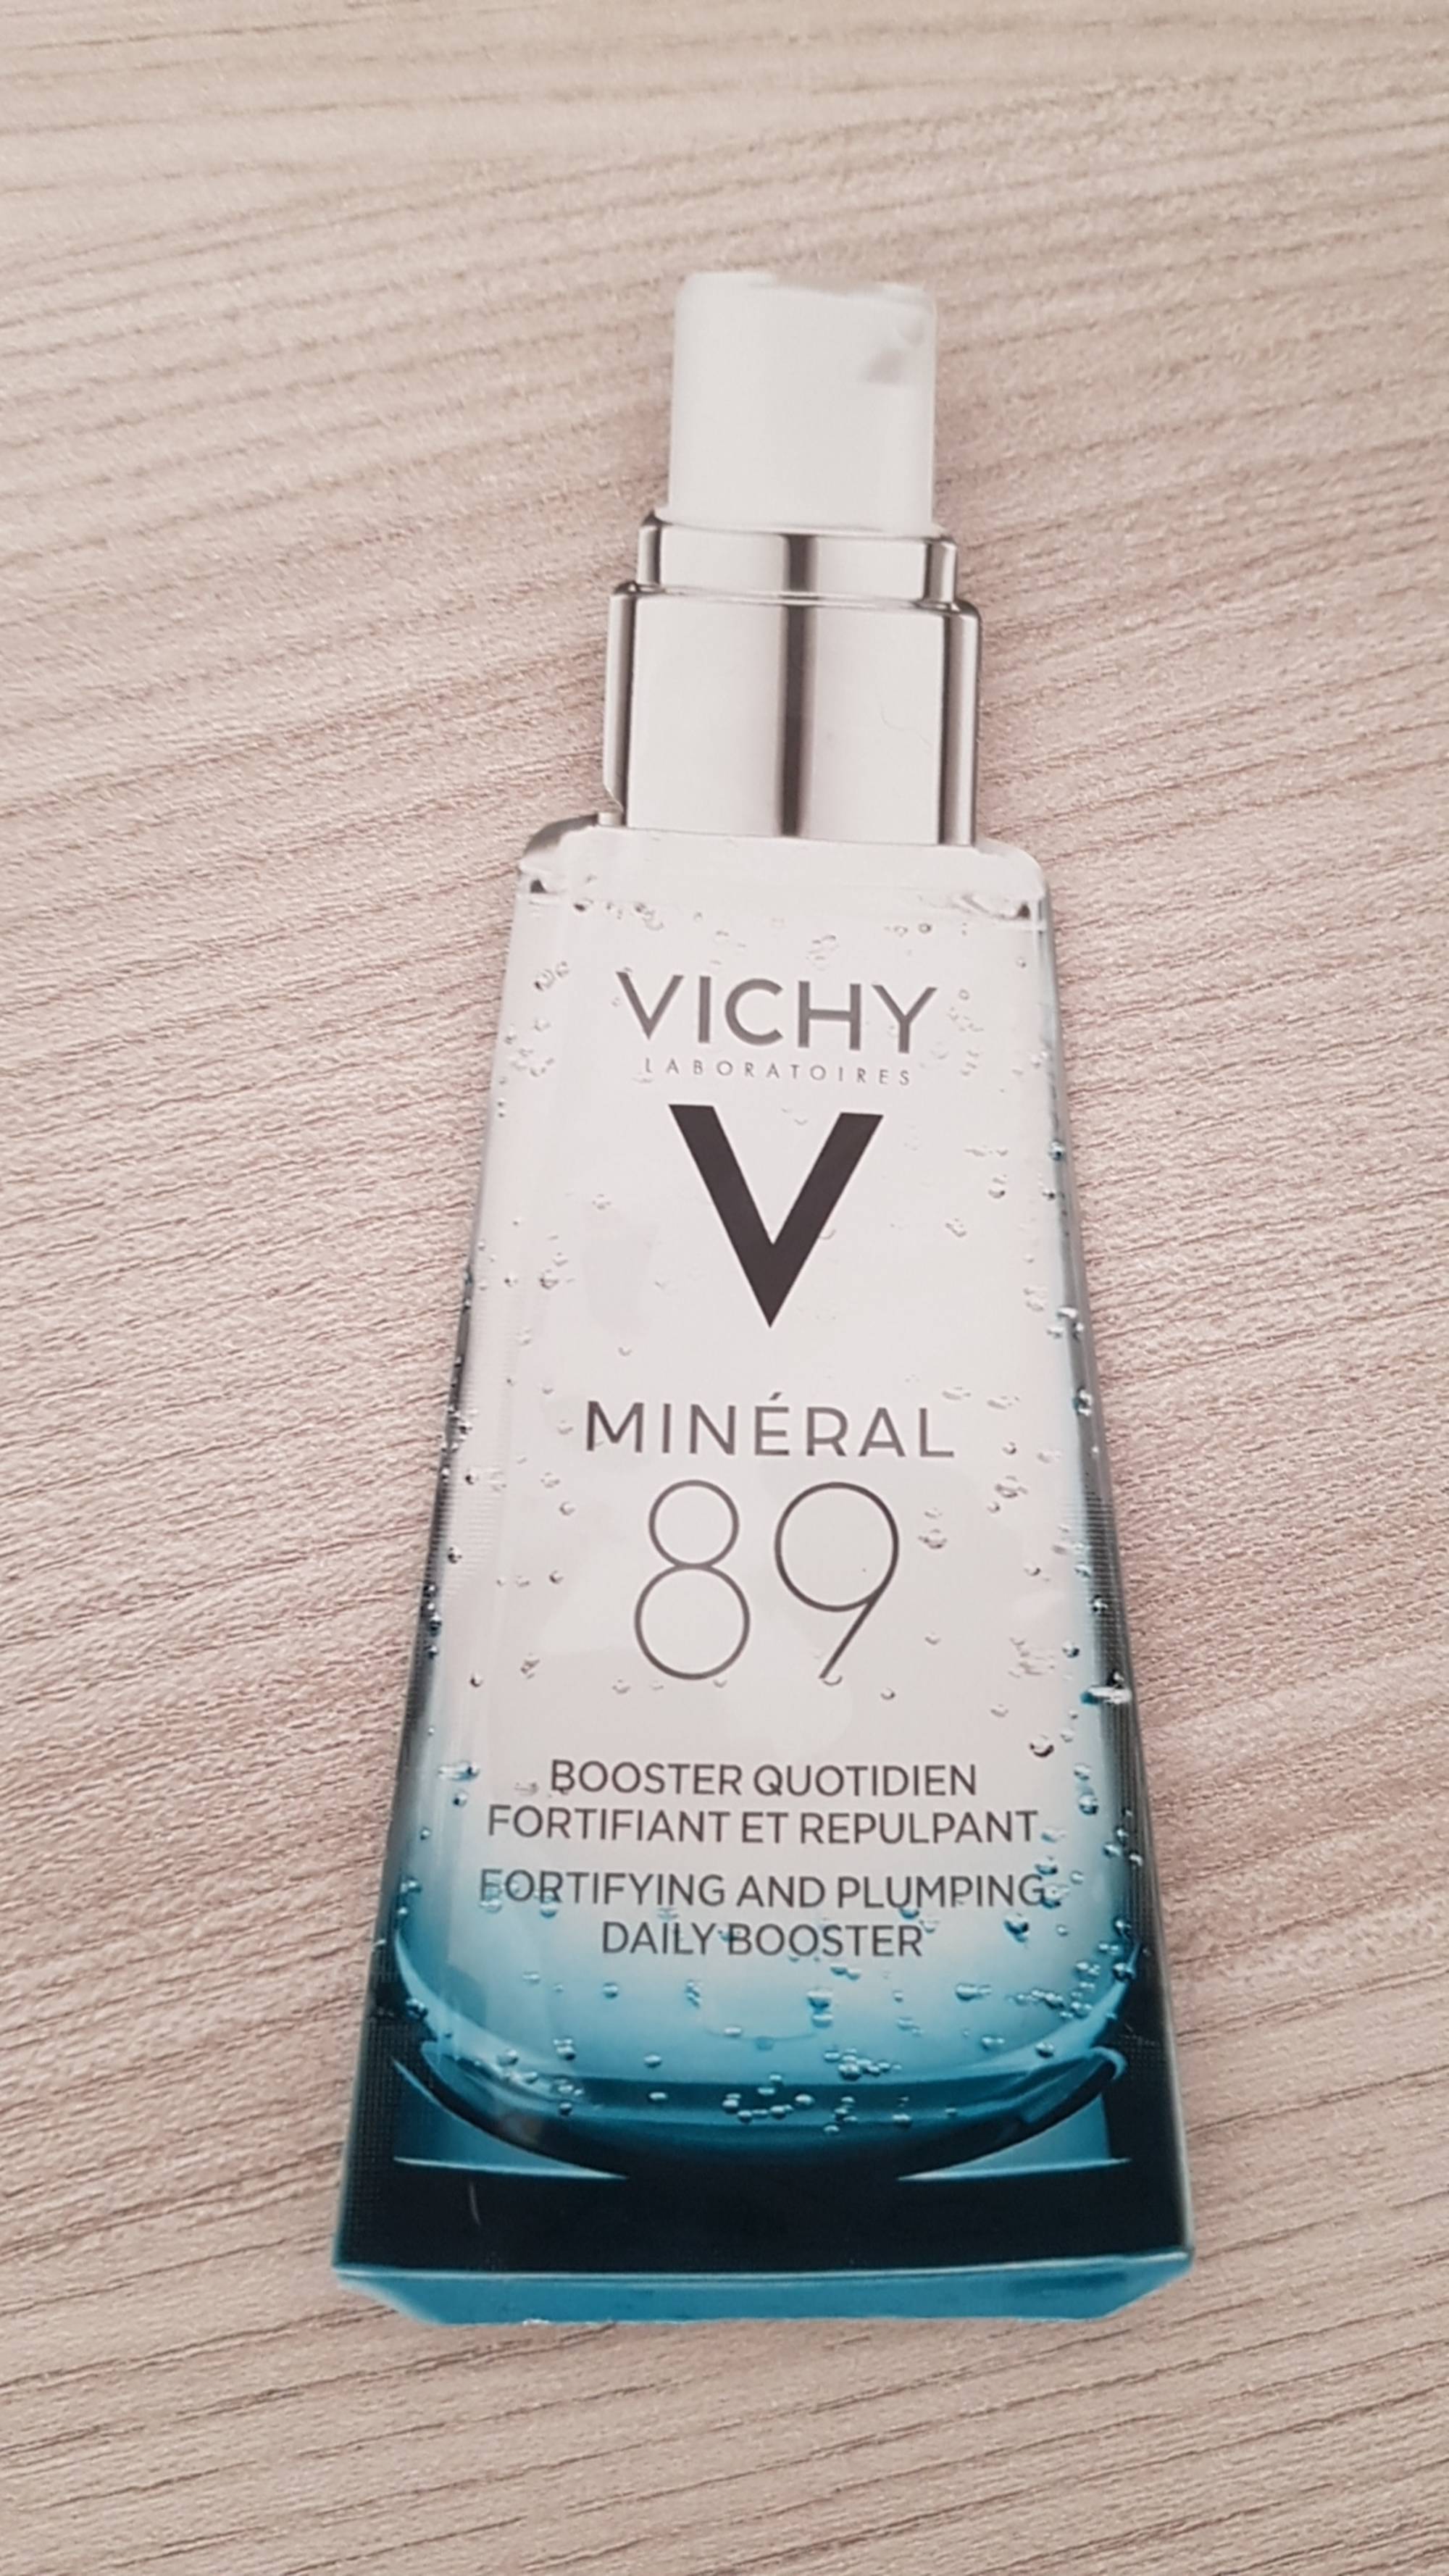 VICHY - Mineral 89 - Booster quotidien fortifiant et repulpant